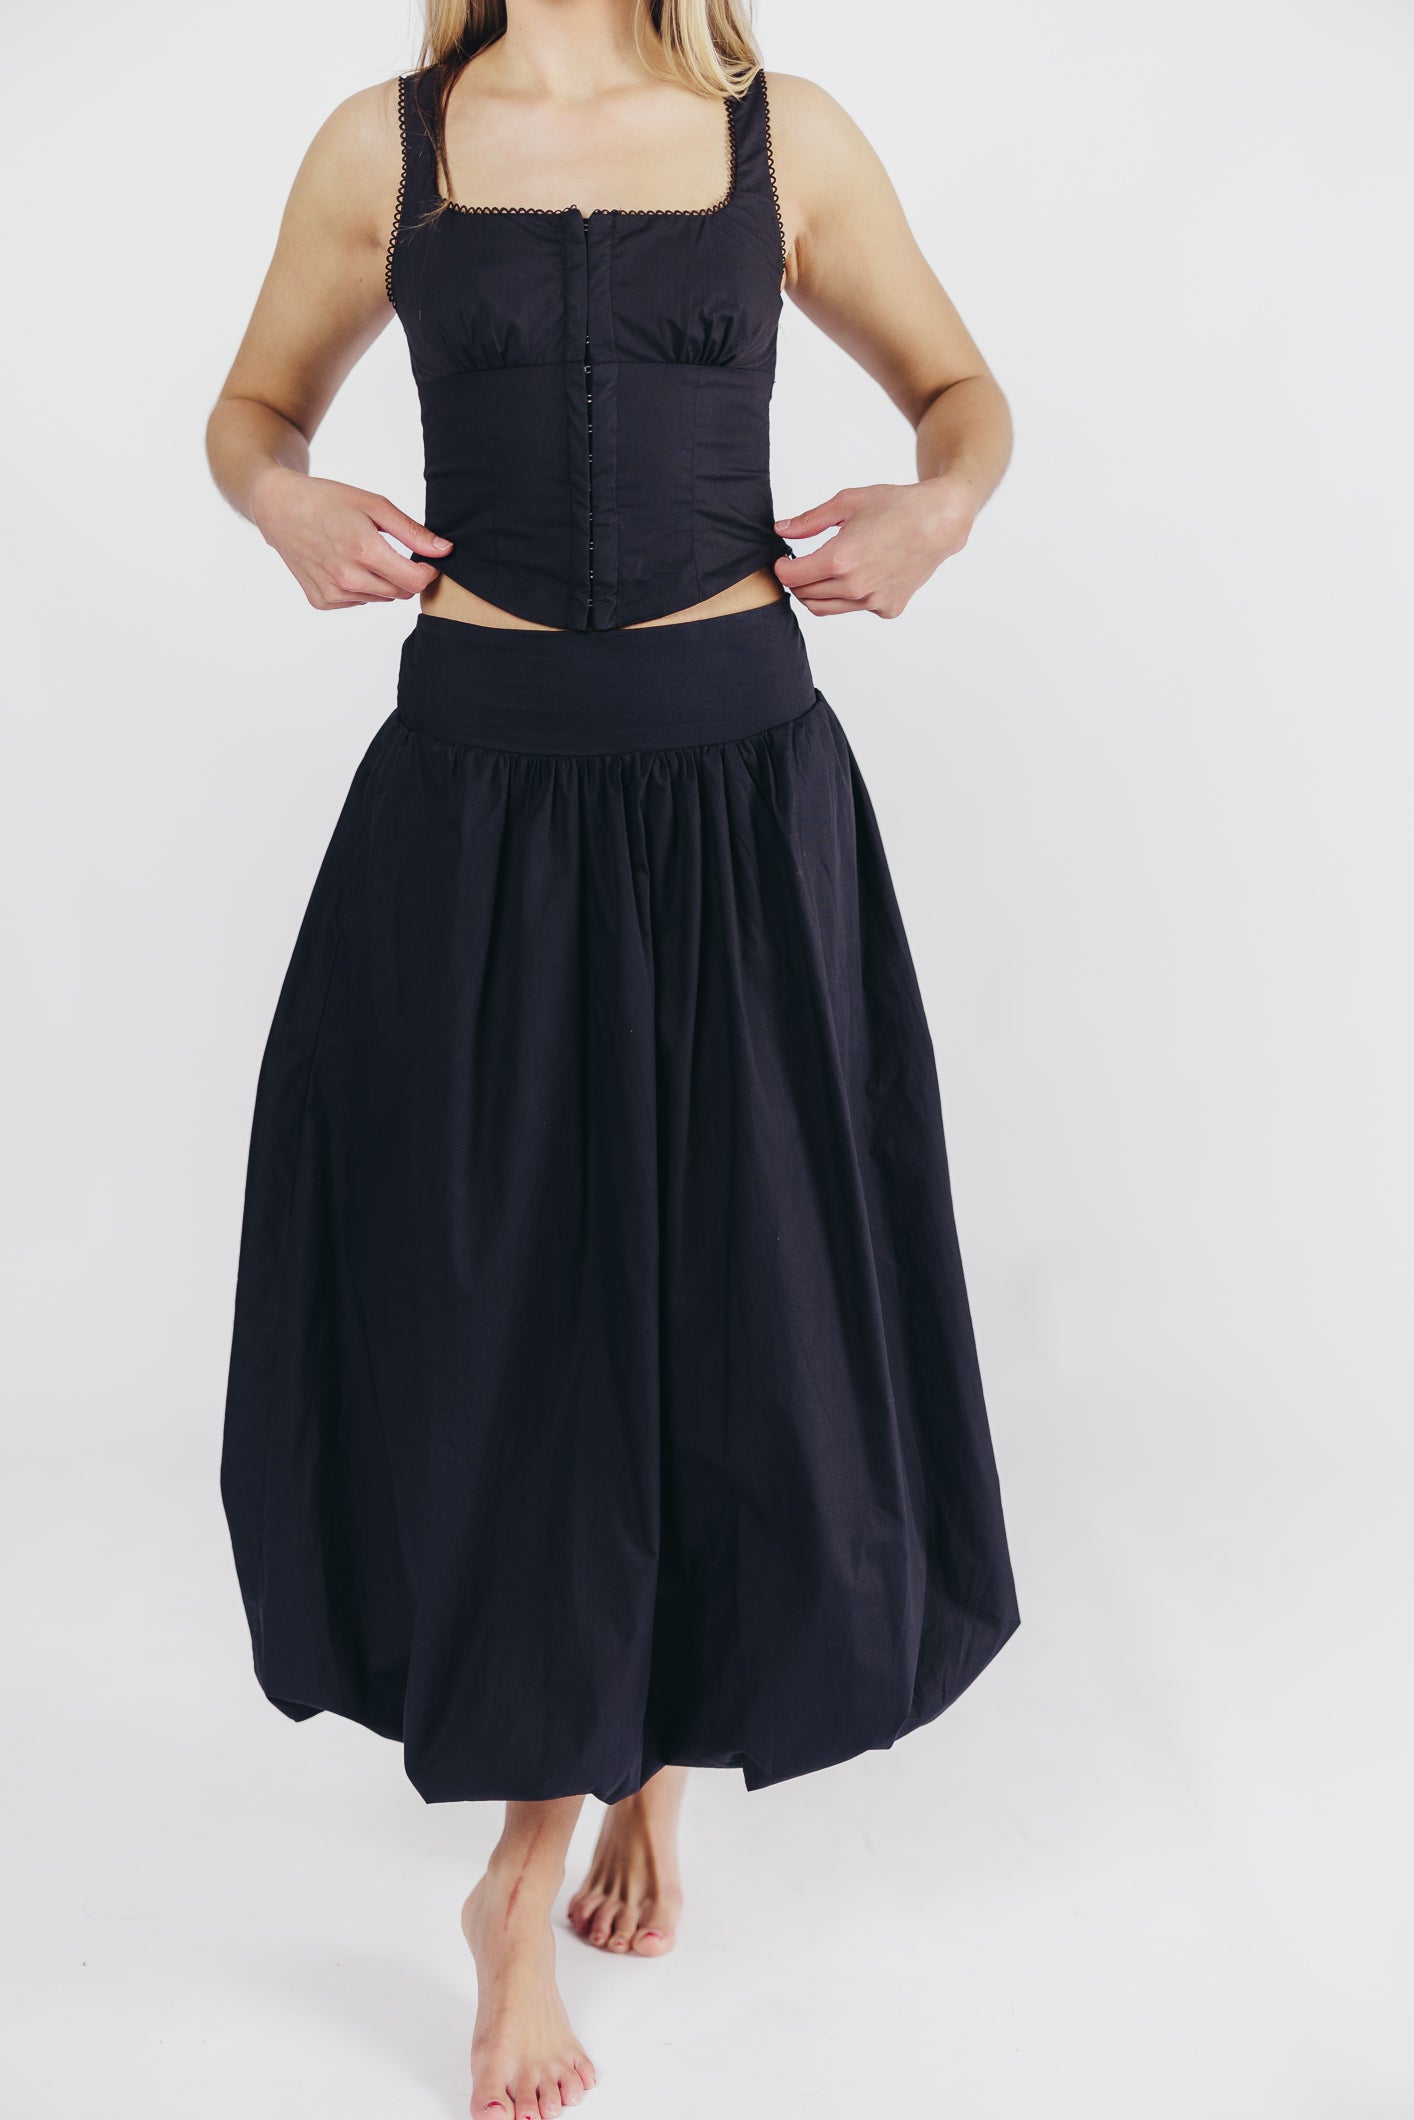 Reina Bubble Midi Skirt in Black